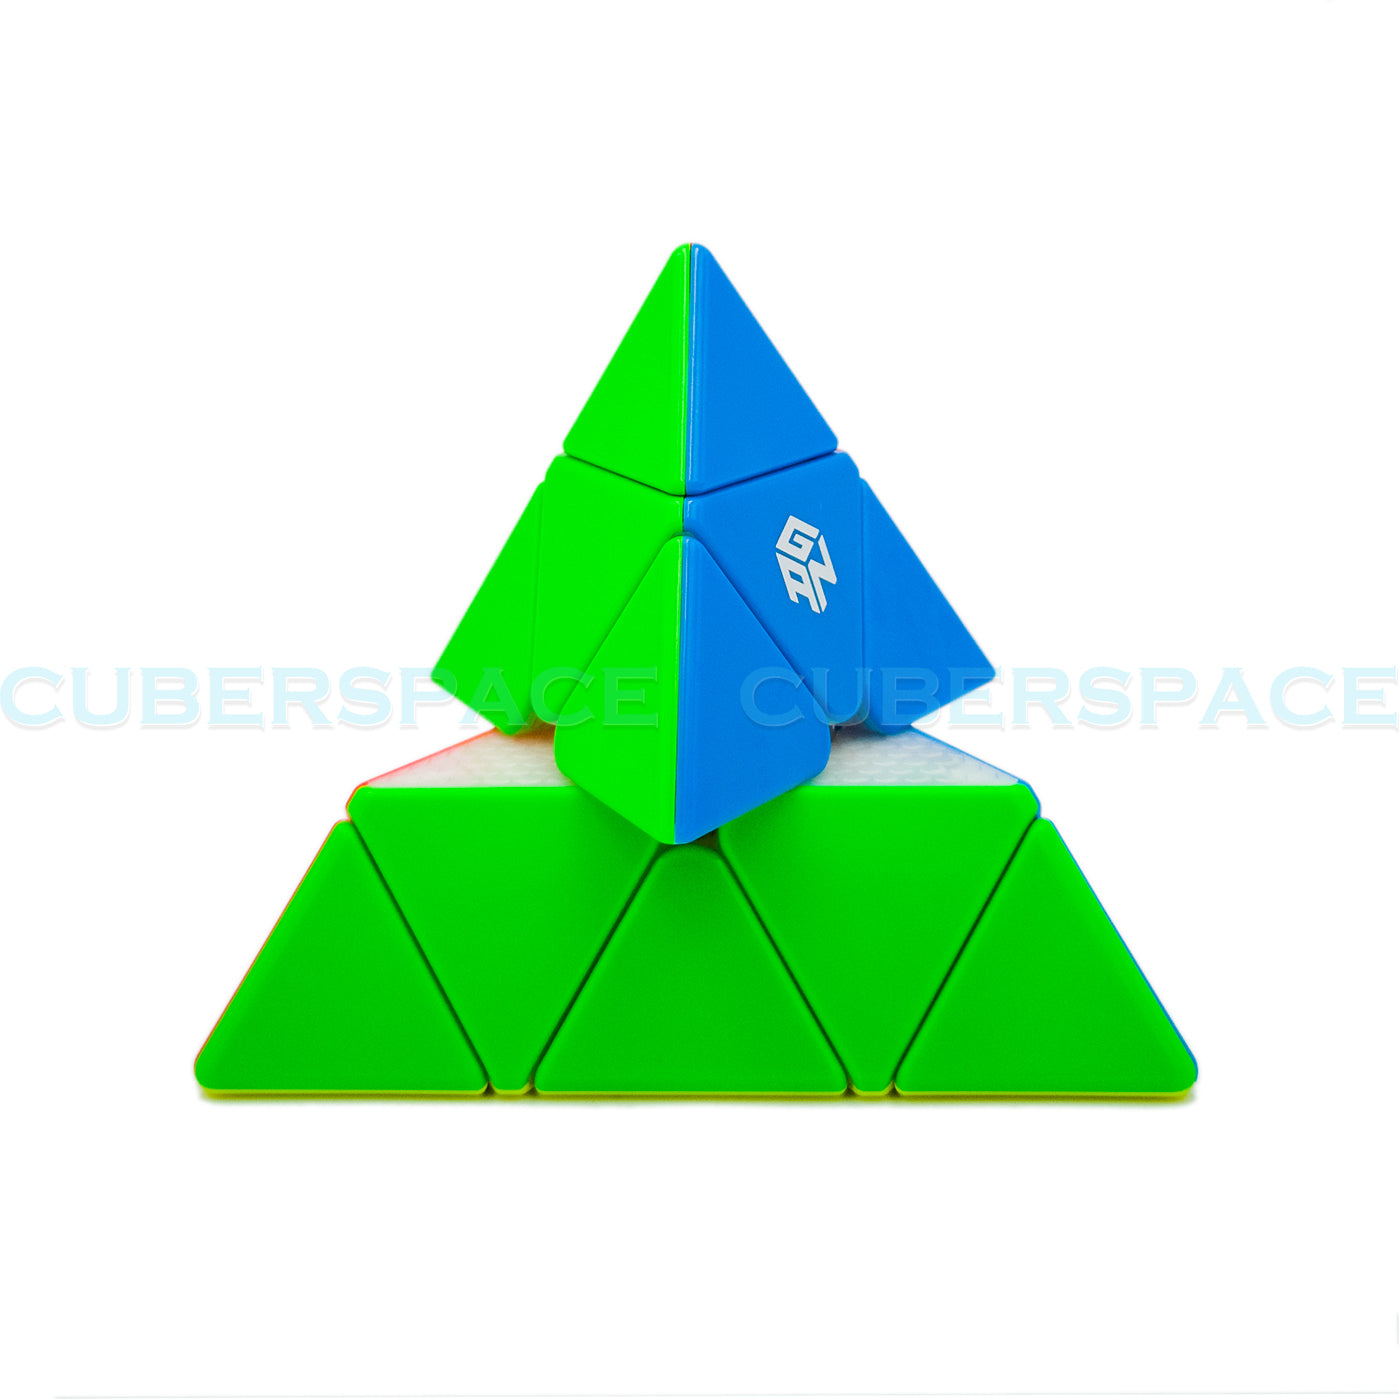 GAN Speed Cube Set 2x2 3x3 Pyraminx Cube Bundle